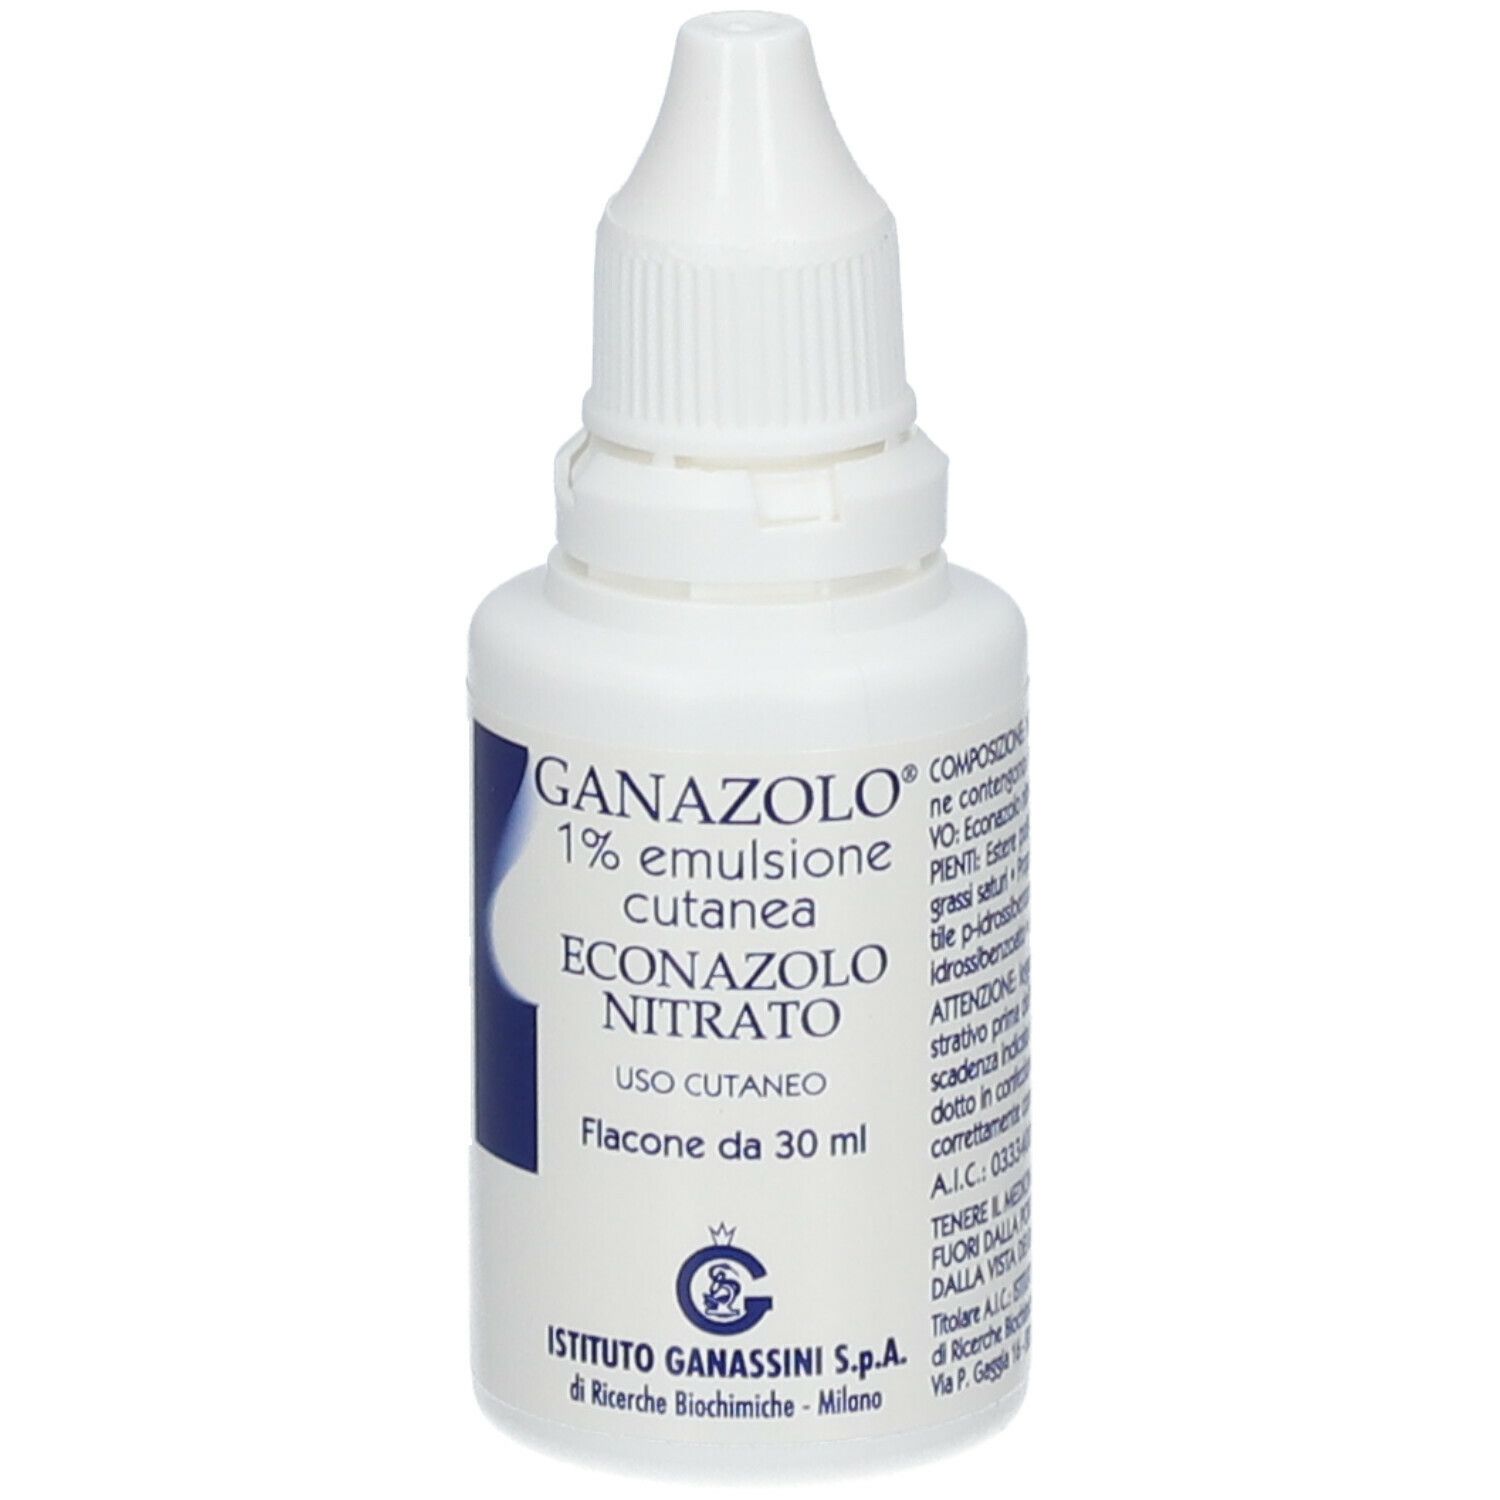 GANAZOLO® 1% Emulsione Cutanea Flacone da 30 ml